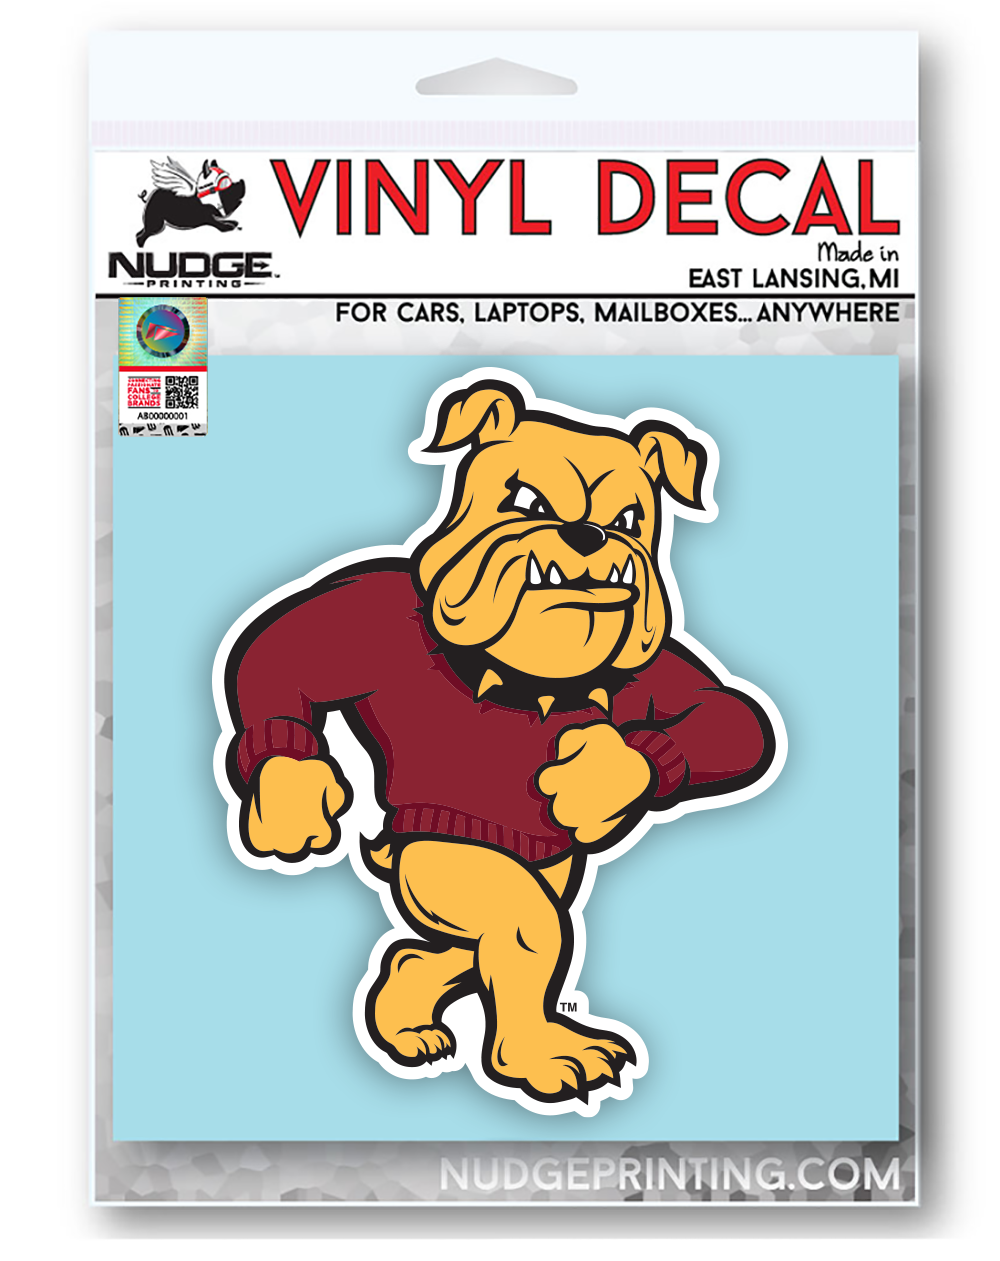 Minnesota-Duluth Full Bulldog Mascot Logo Car Decal Bumper Sticker